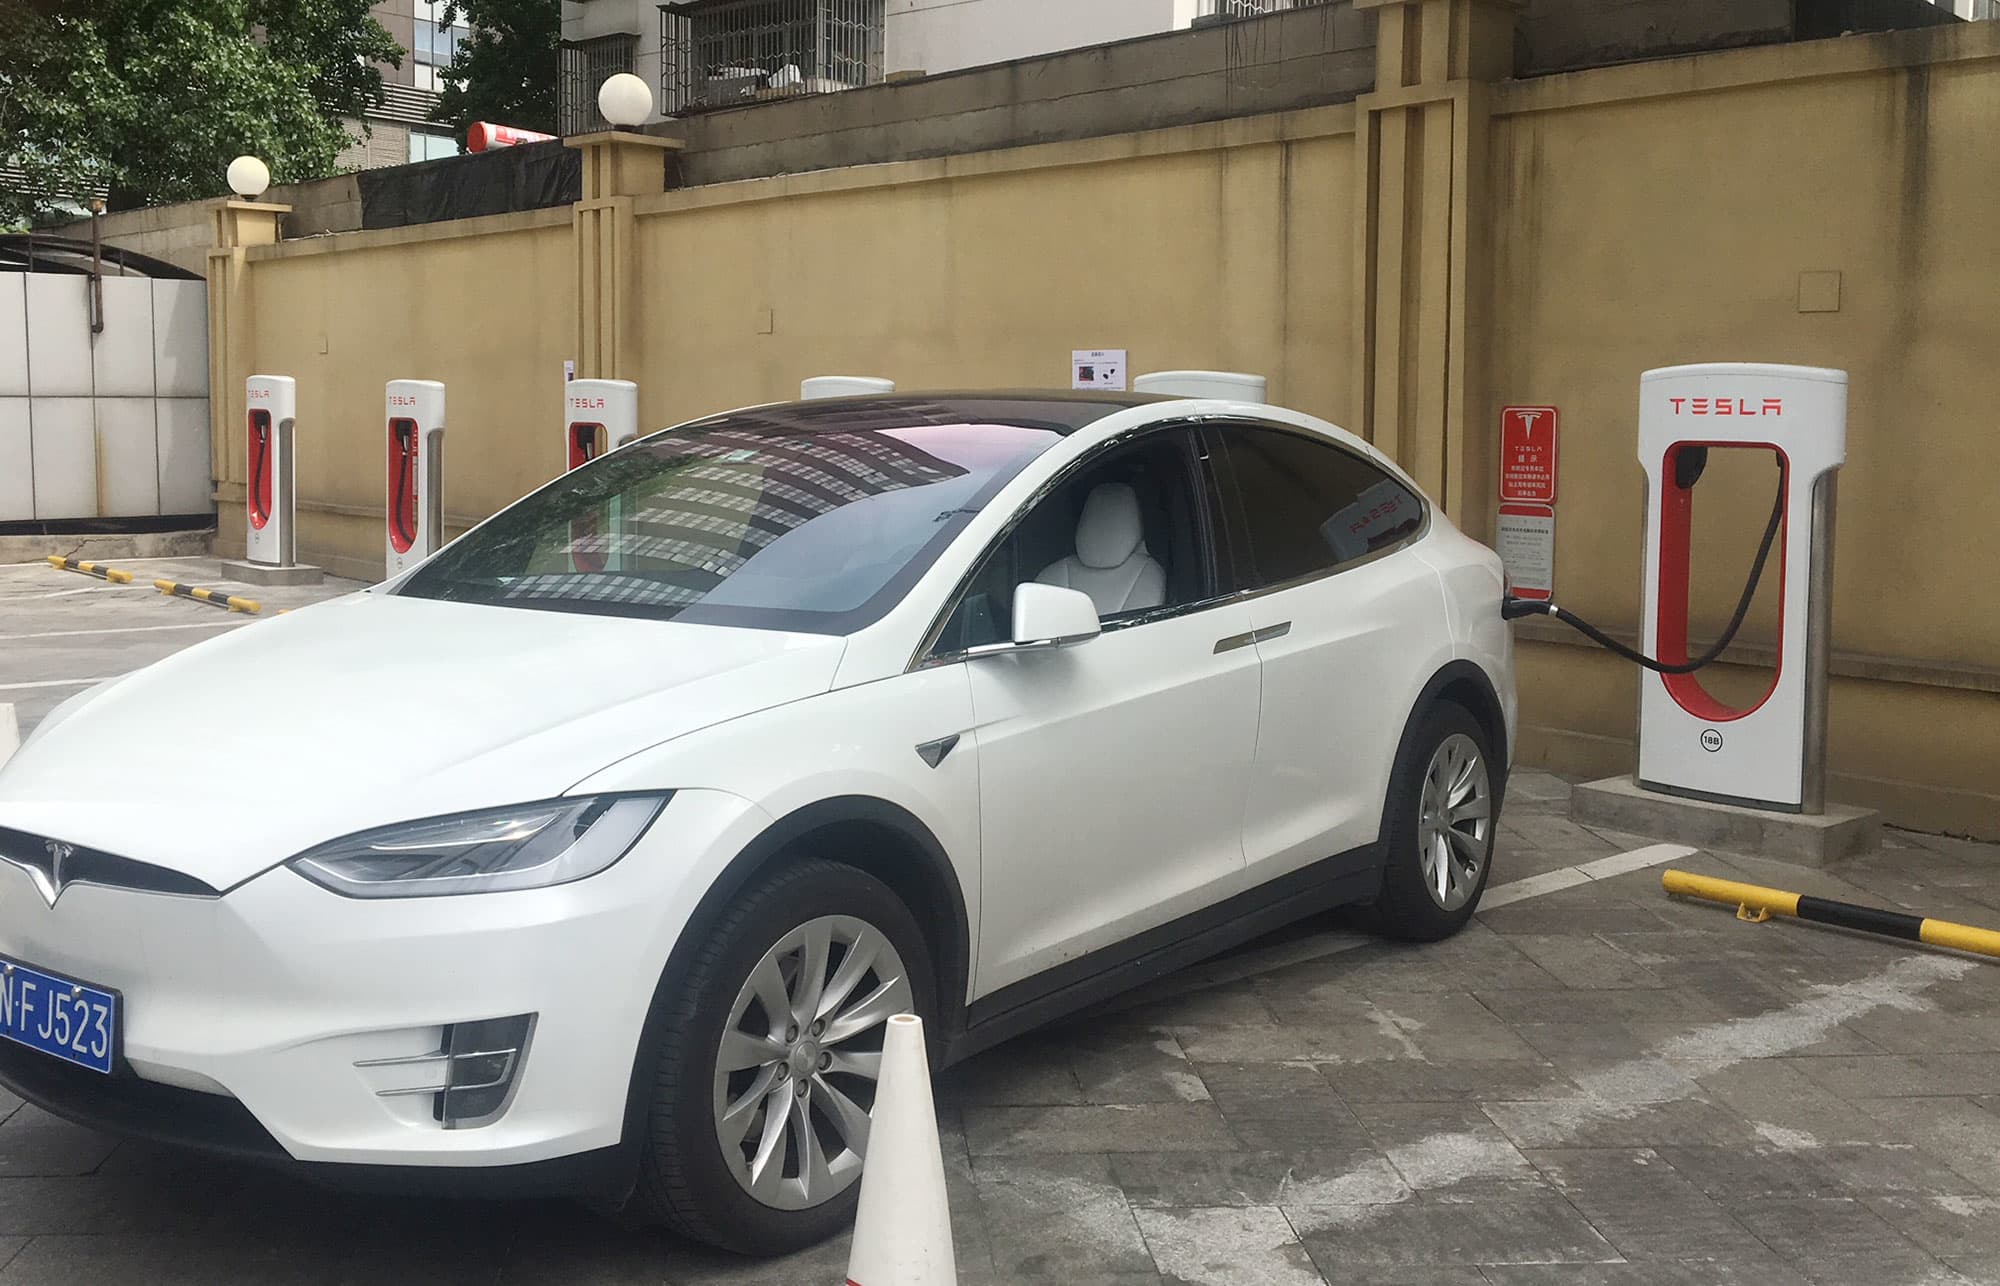 Consumer Reports 2021 auto reliability survey: How Tesla, EVs fared